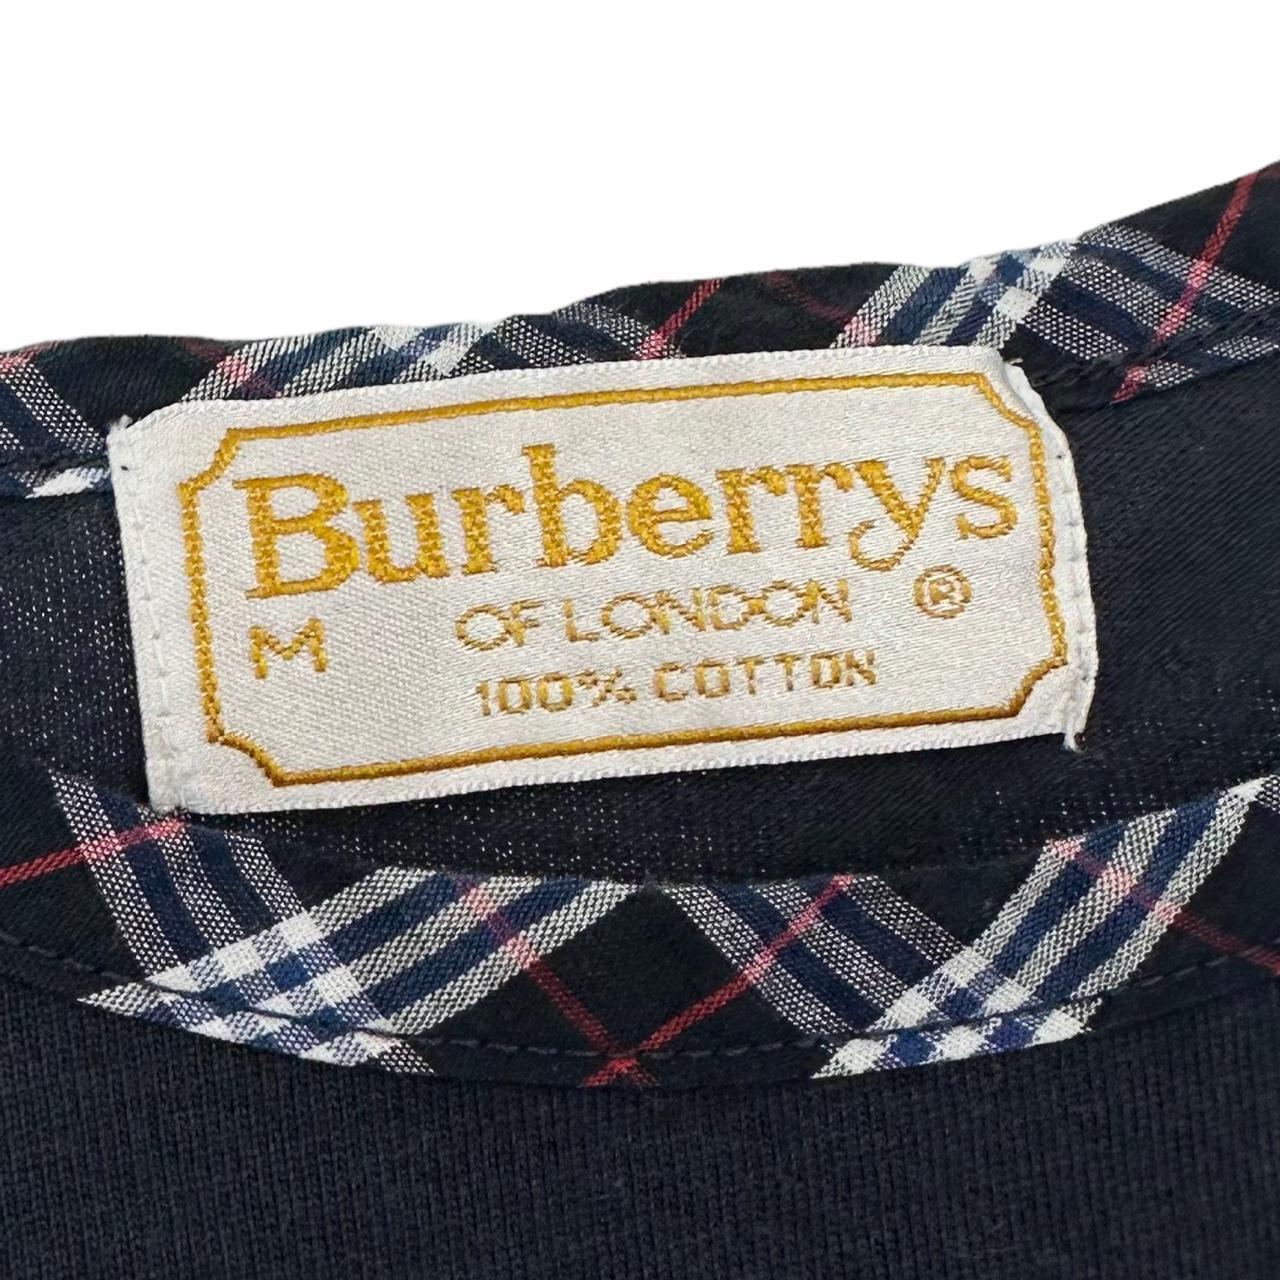 Vintage Burberry Spellout T Shirt Woman’s Size M - Known Source